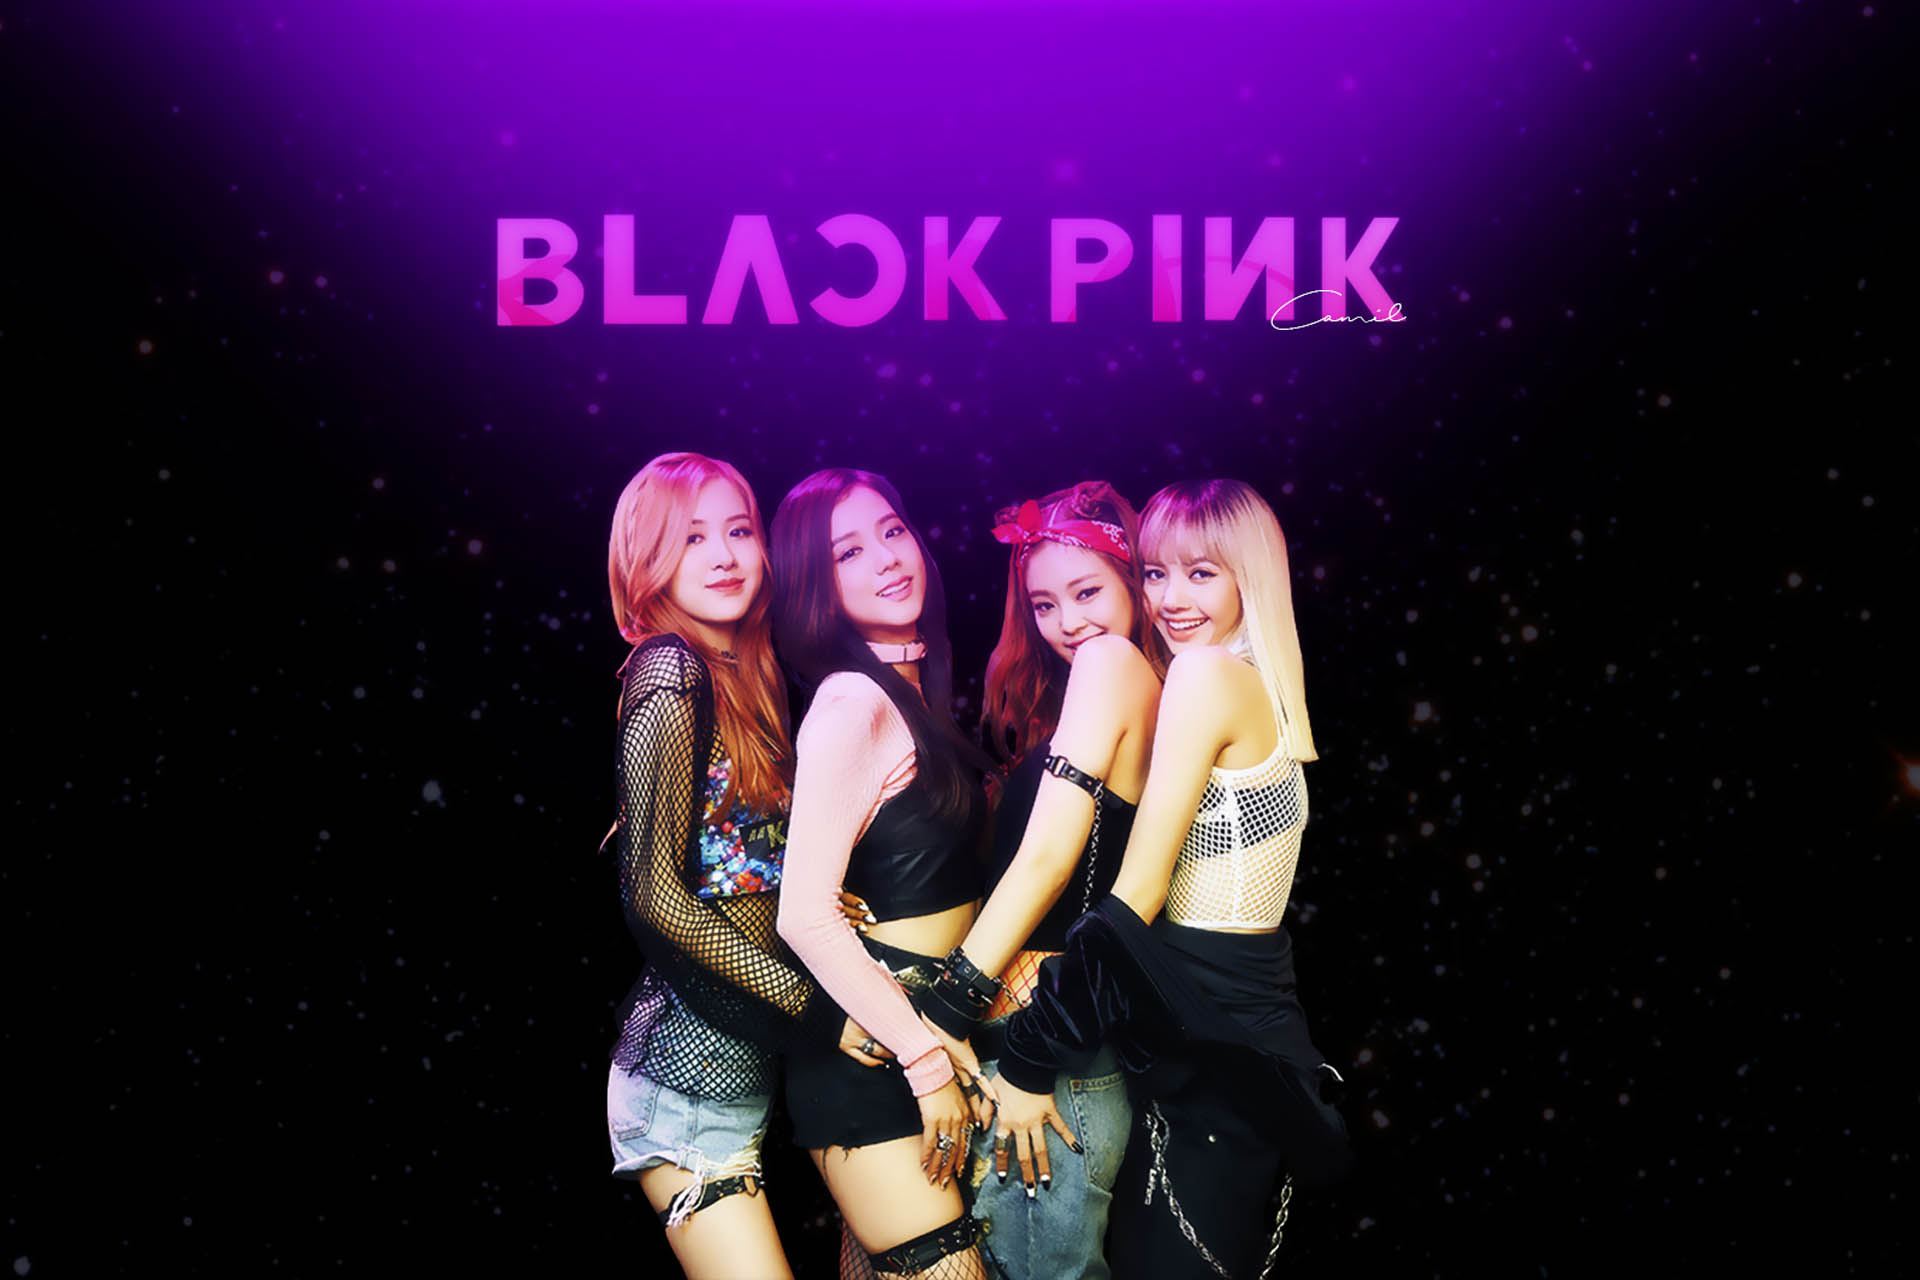 Black Pink’s ‘DDU-DU DDU-DU’ most viewed K-pop music video In 2018 on YouTube